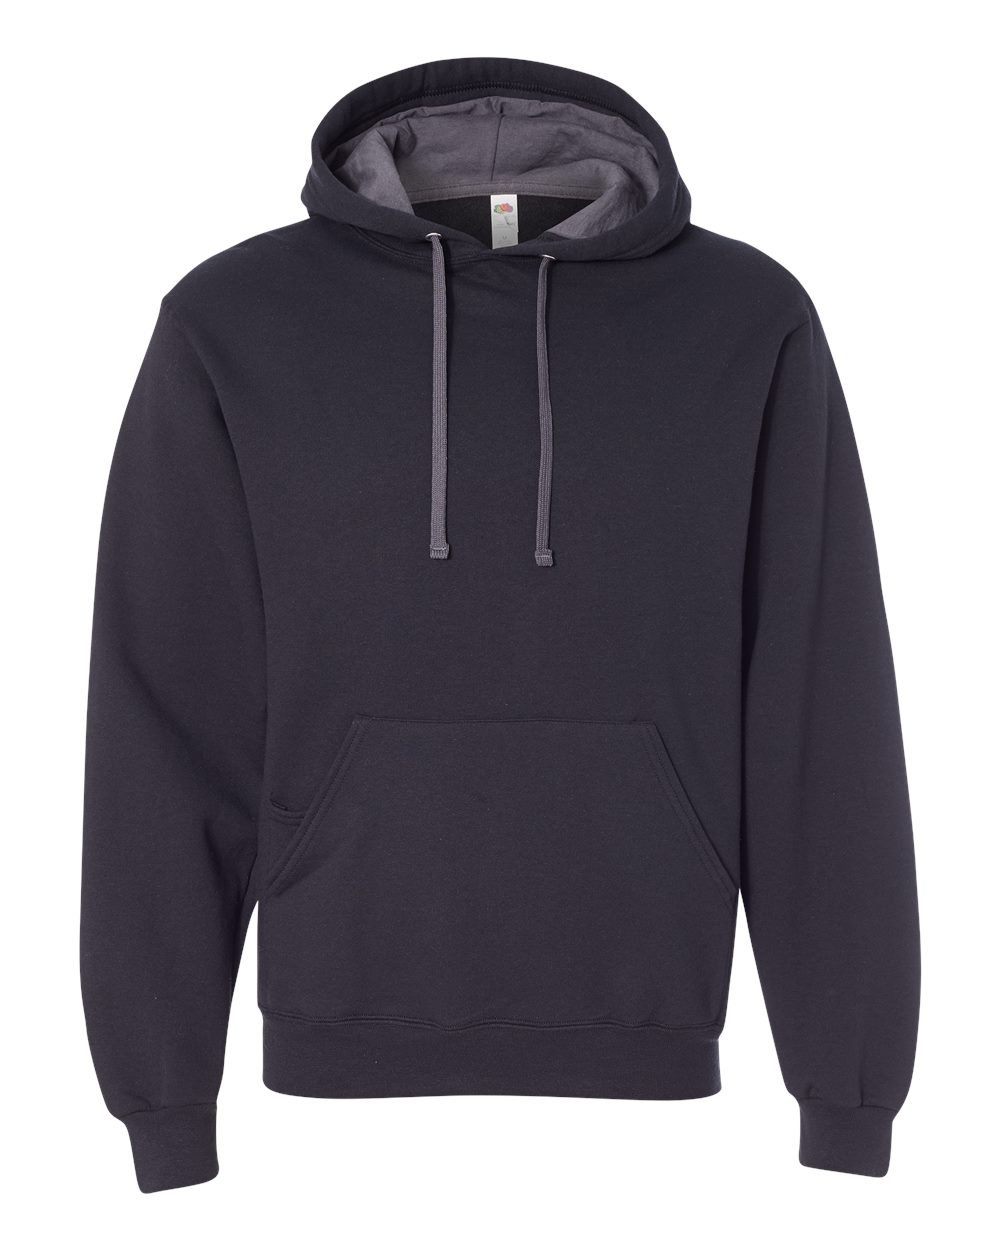 Sofspun Hooded Pullover Sweatshirt - Charcoal Grey